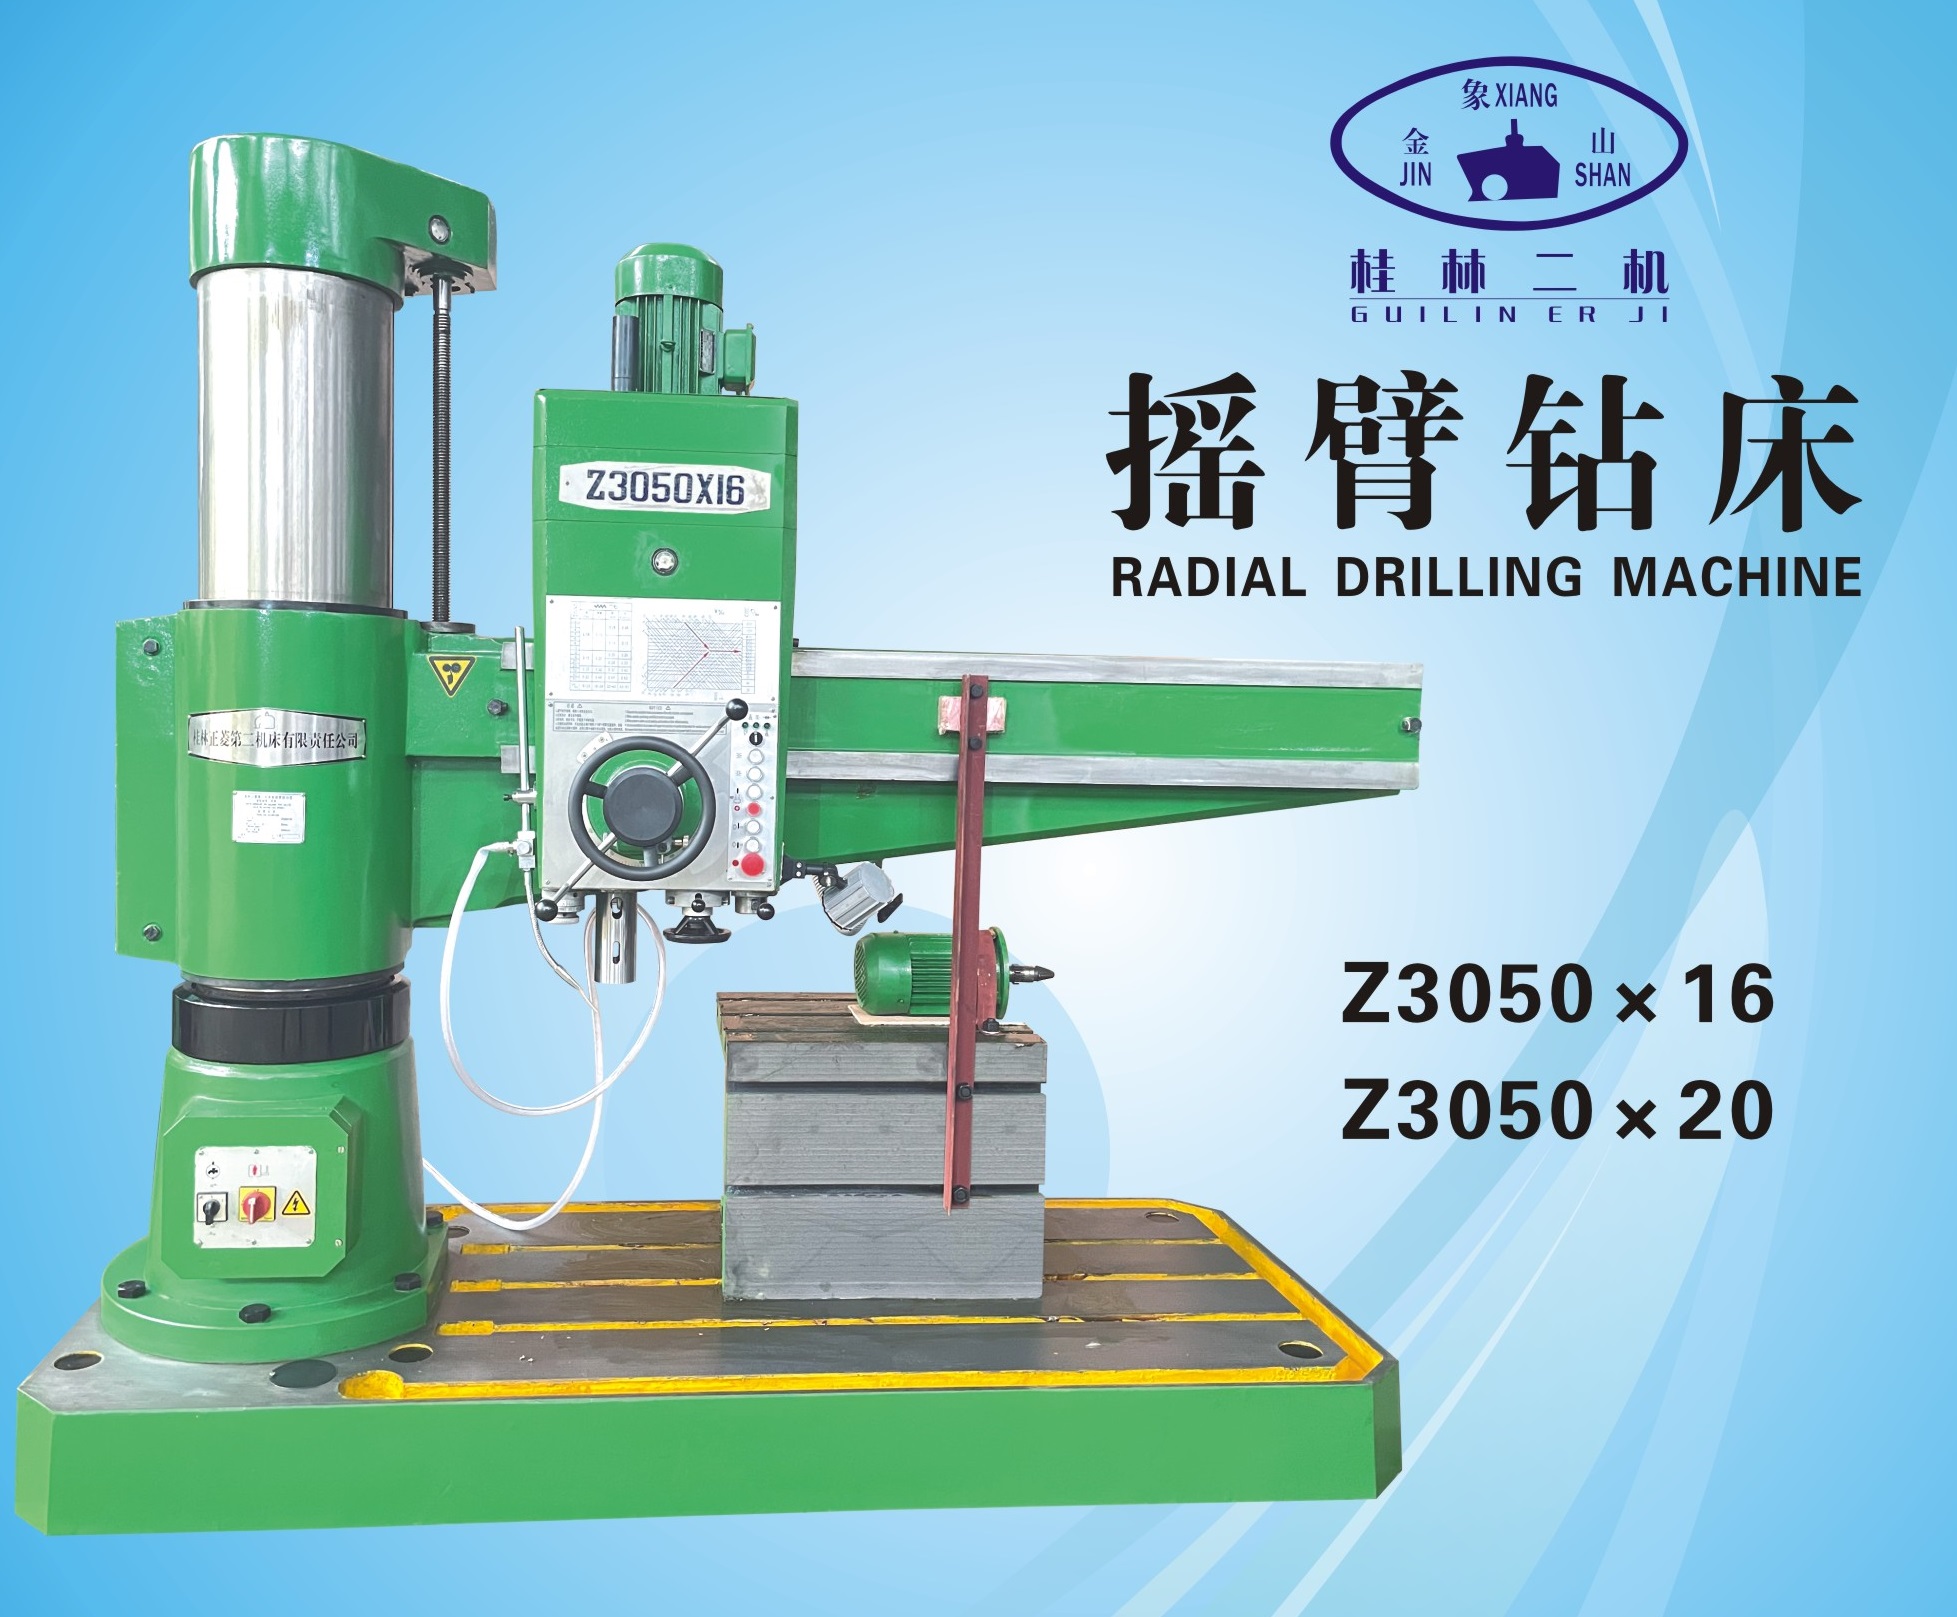 Radial Drilling Machine Z3050